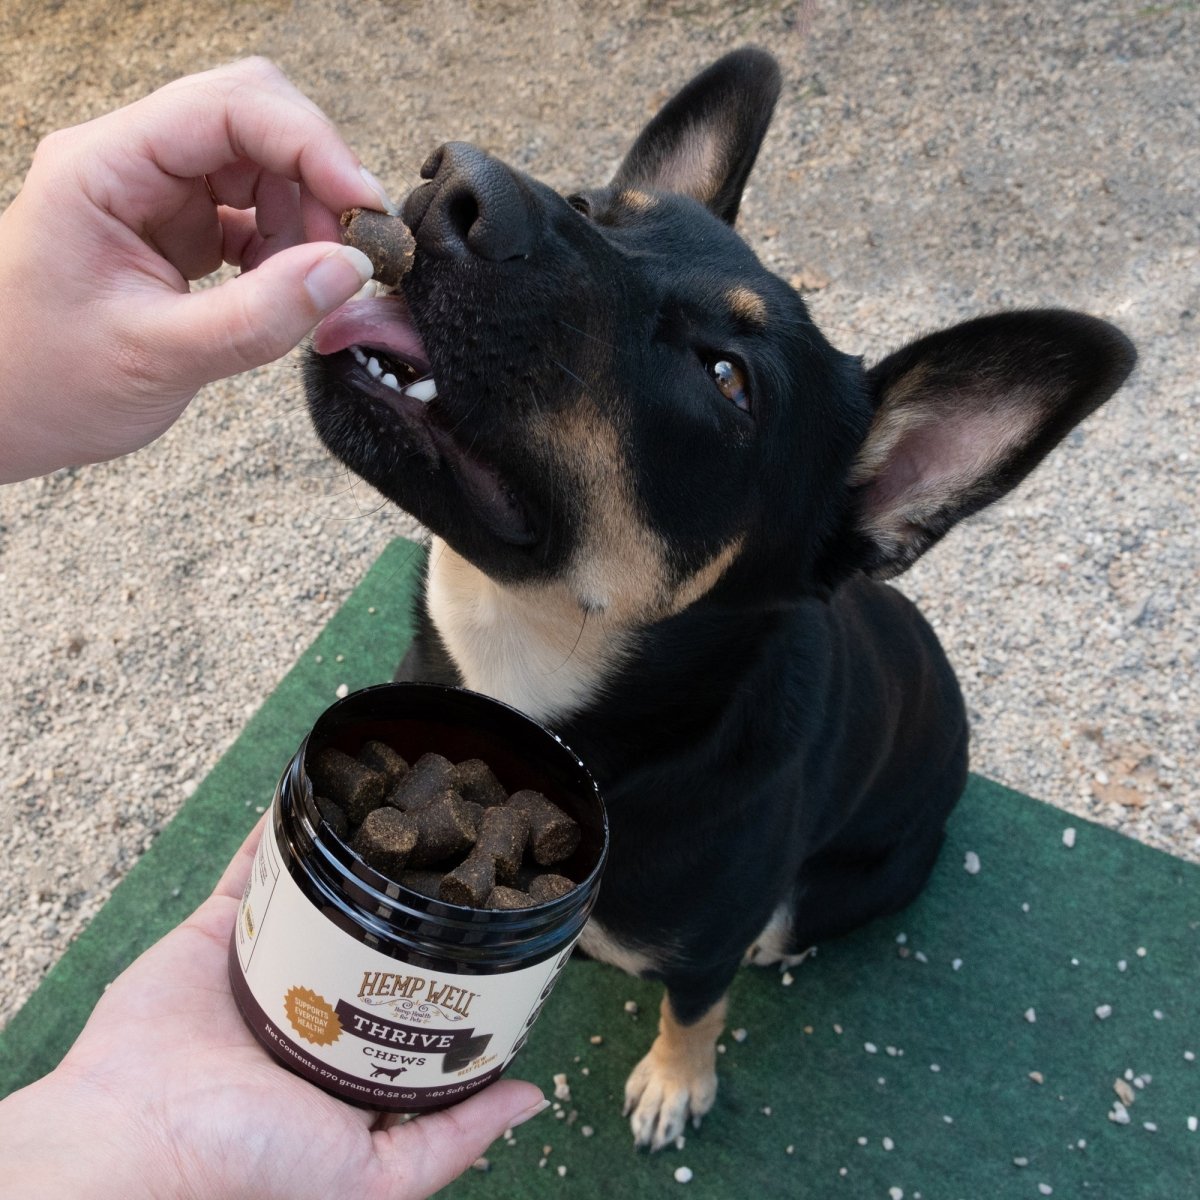 Thrive Dog Soft Chews - Hemp Well dog dog treats hemp